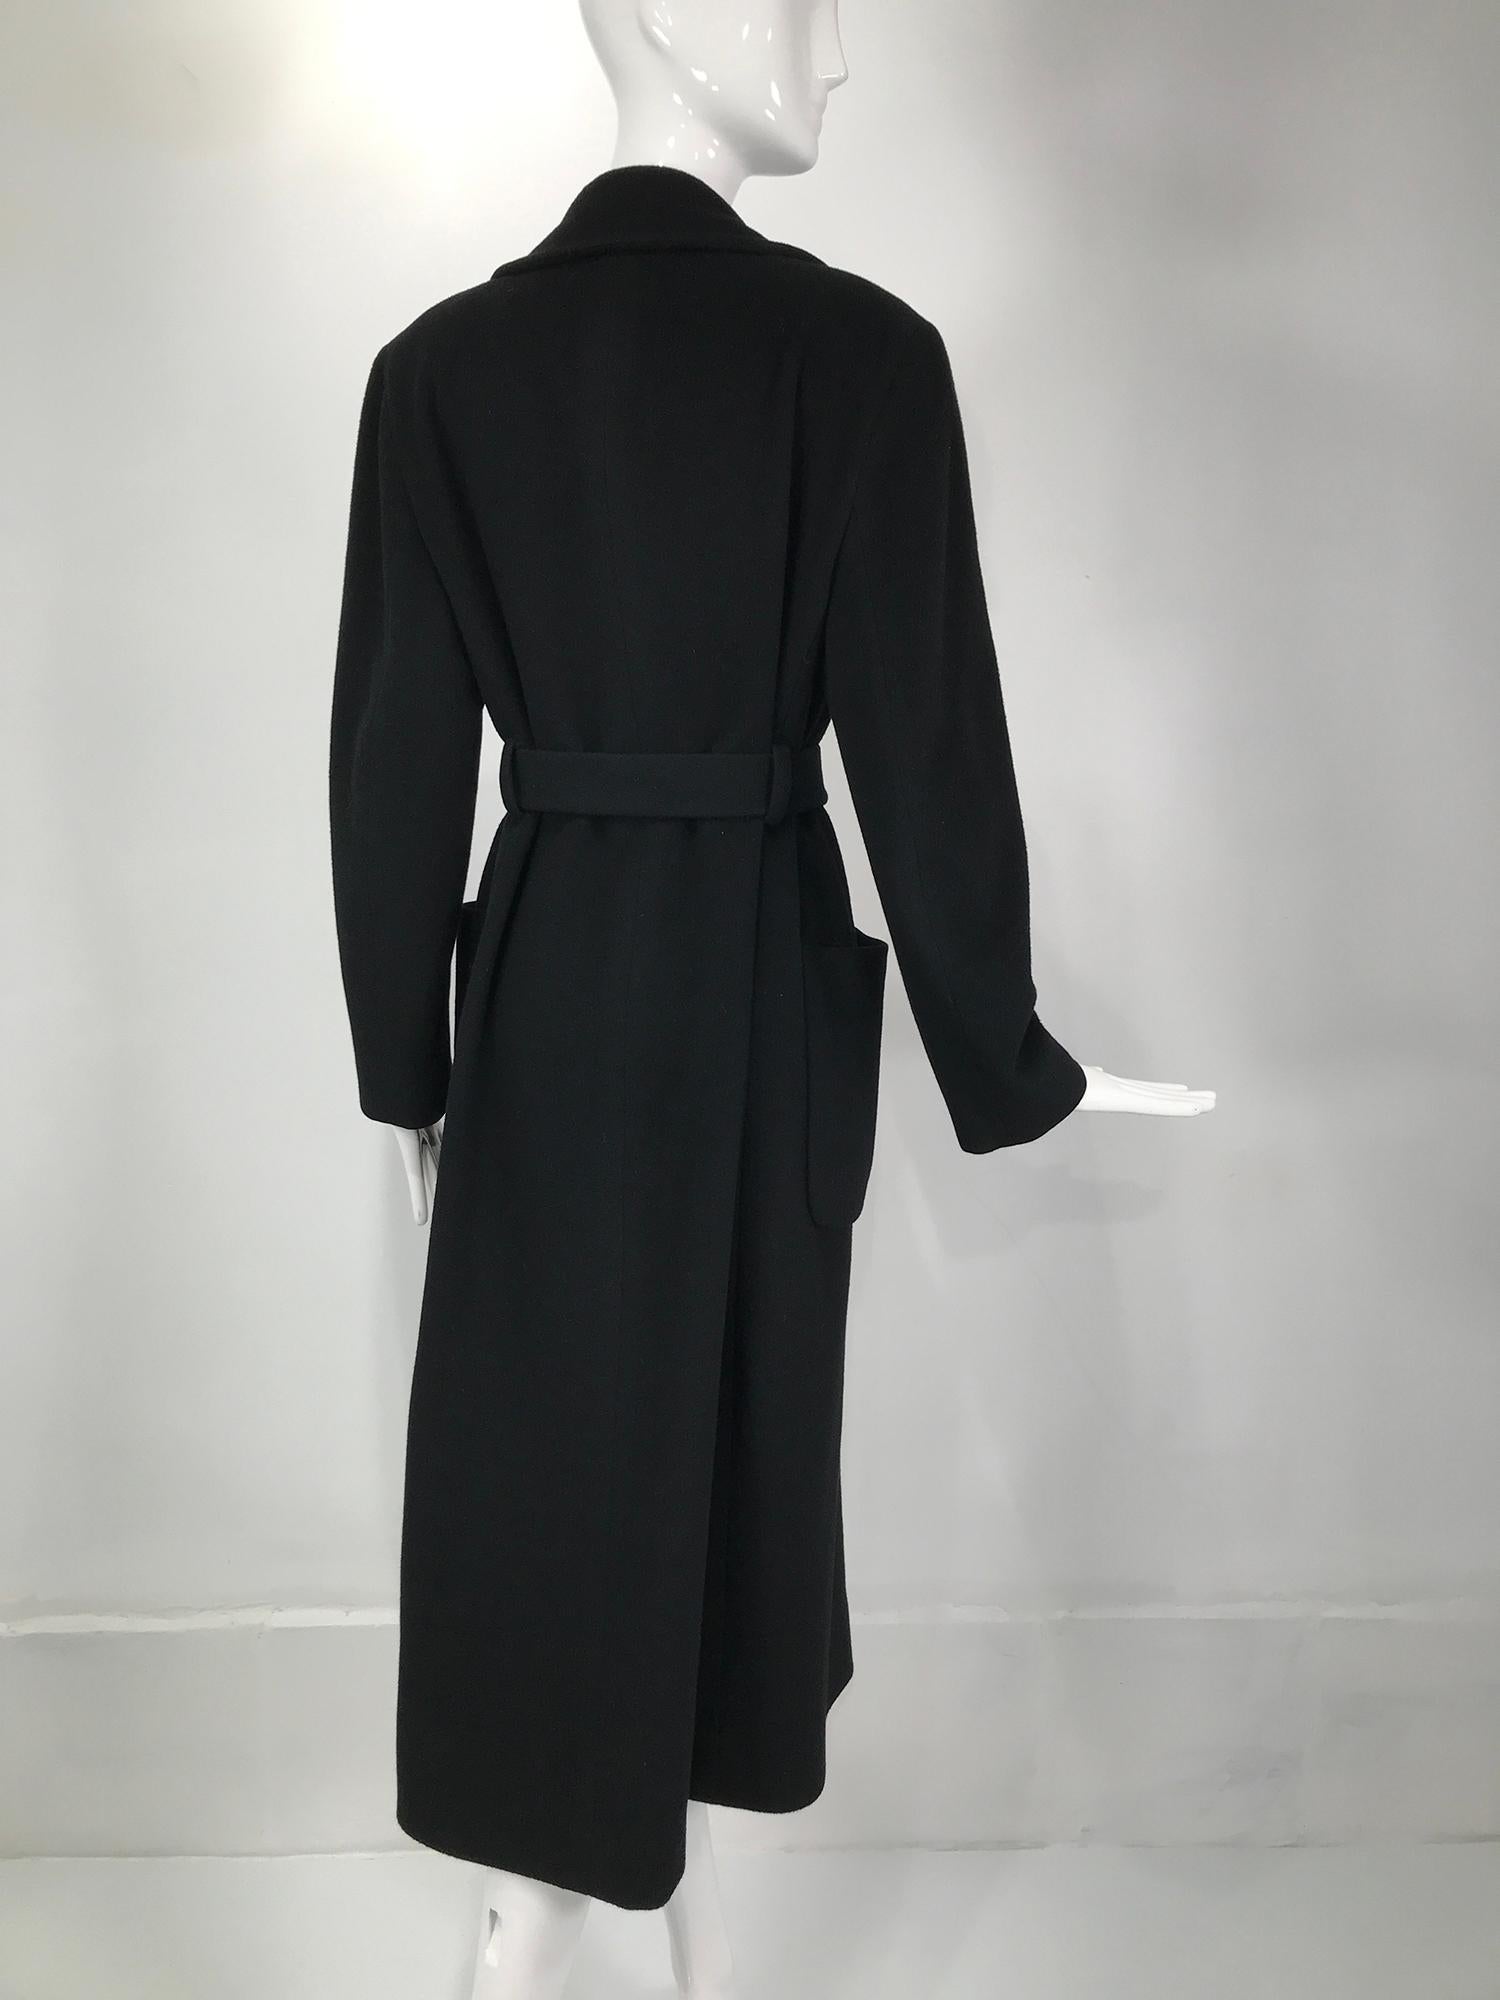 donna karan black coat